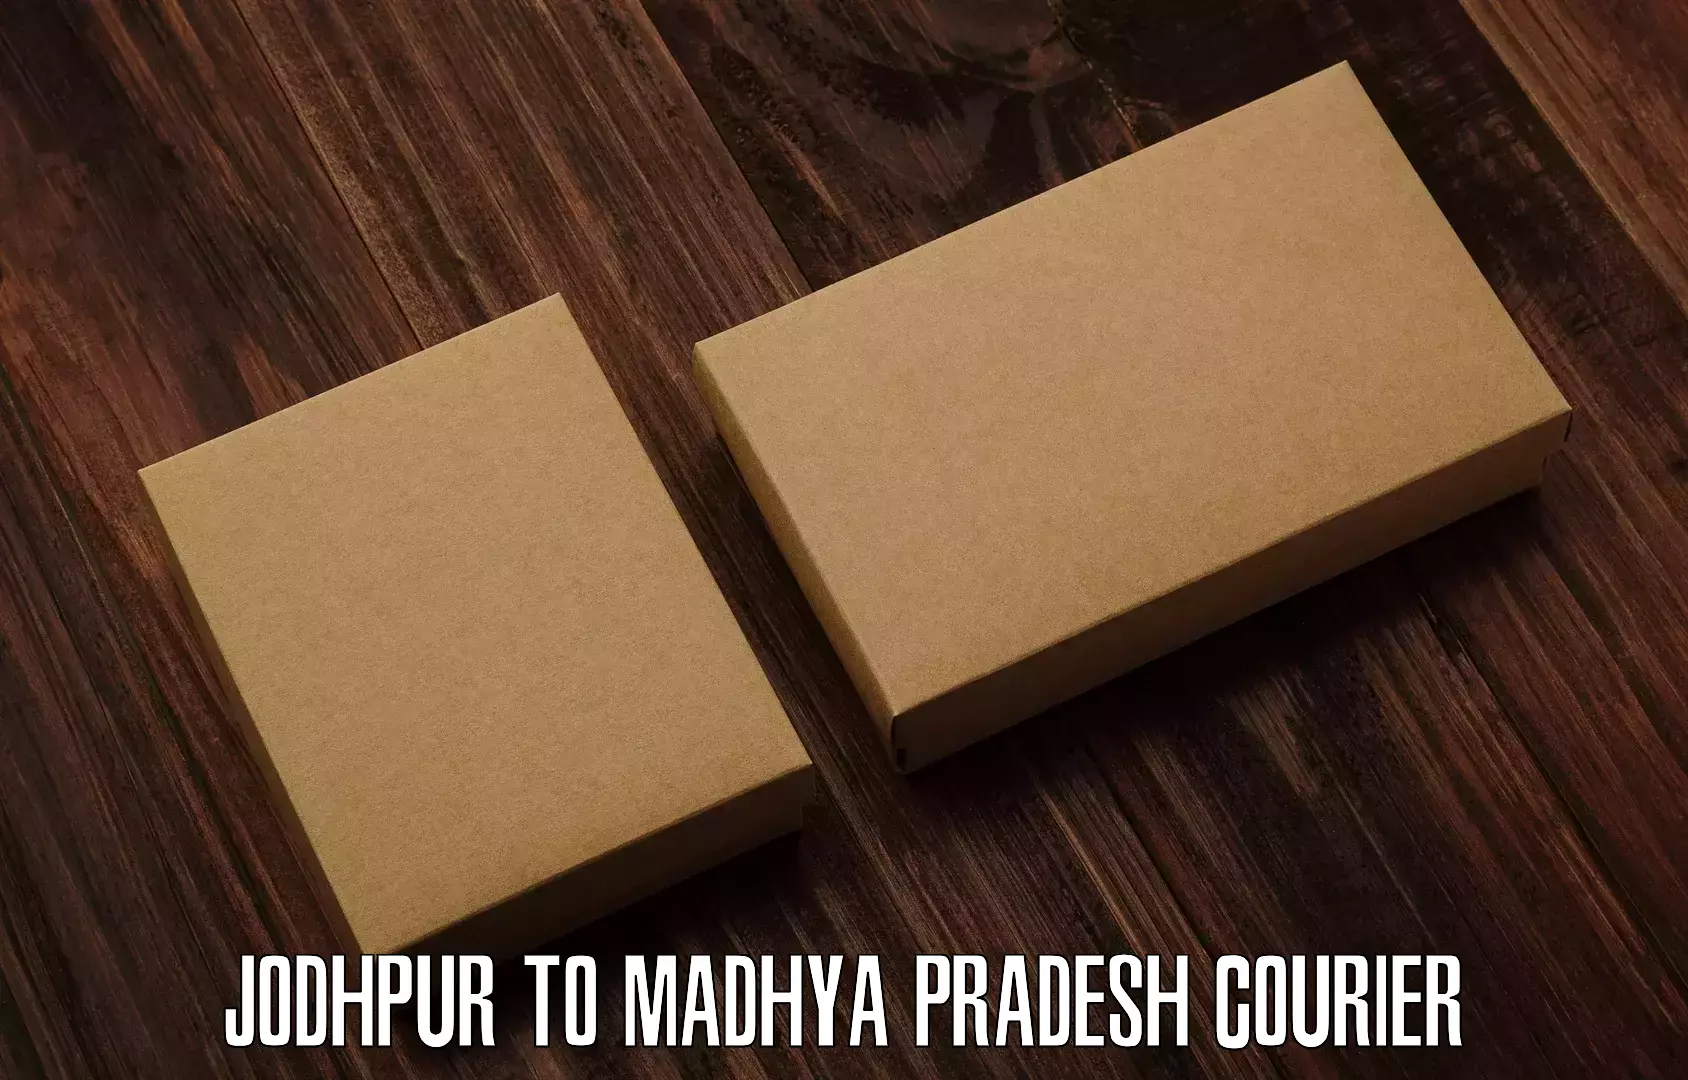 Package delivery network Jodhpur to Narsinghpur